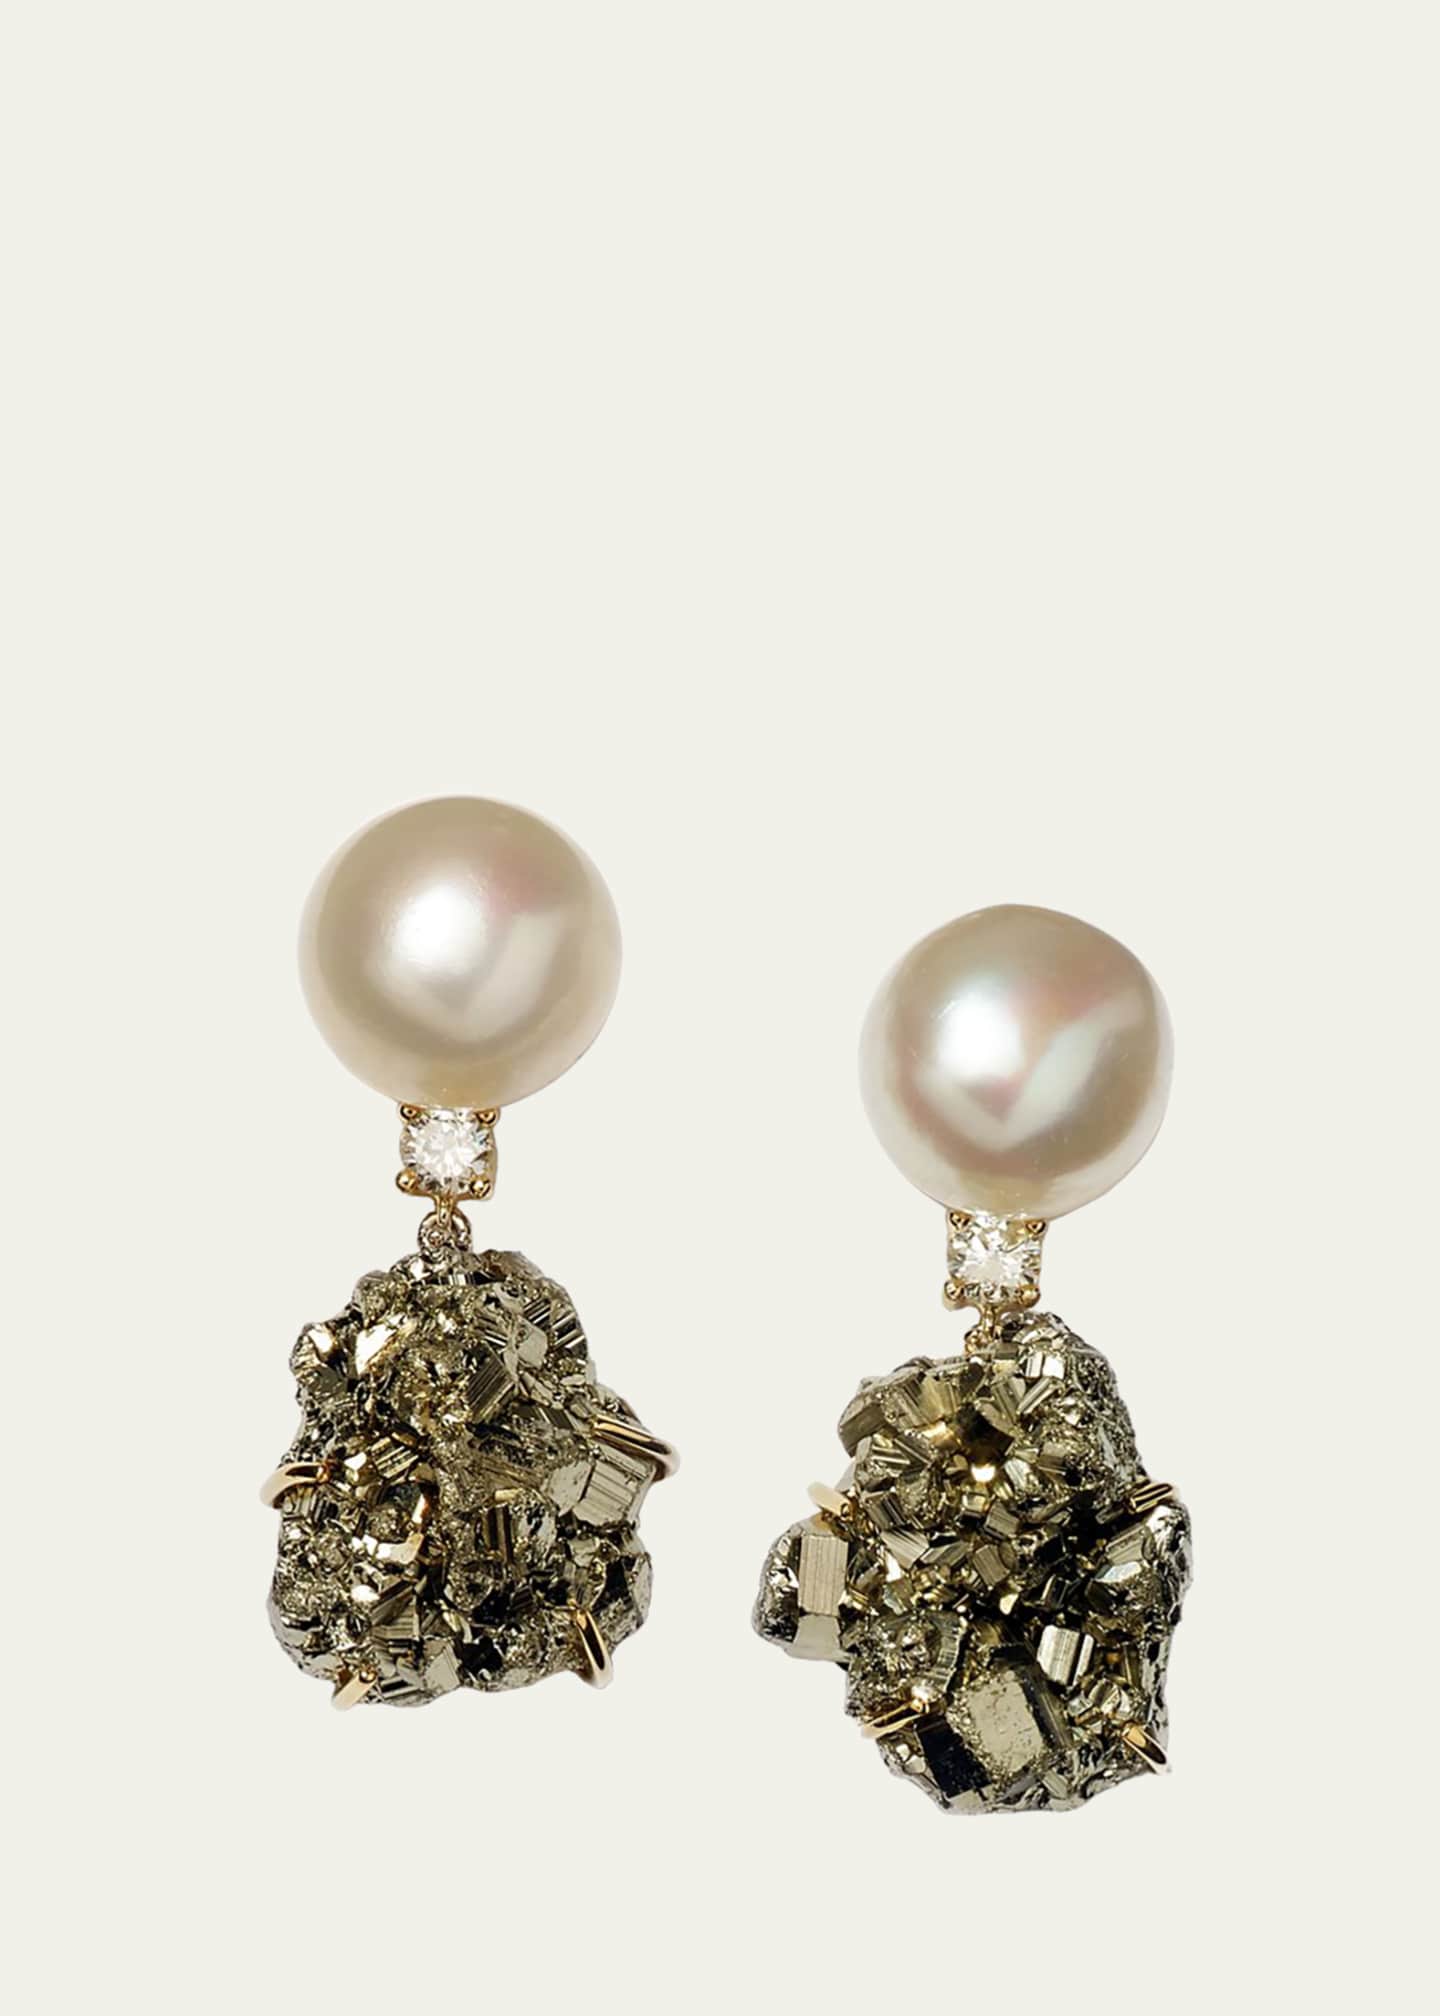 Jan Leslie 18k Bespoke One-of-a-Kind Luxury 2-Tier Earring with Pearl ...